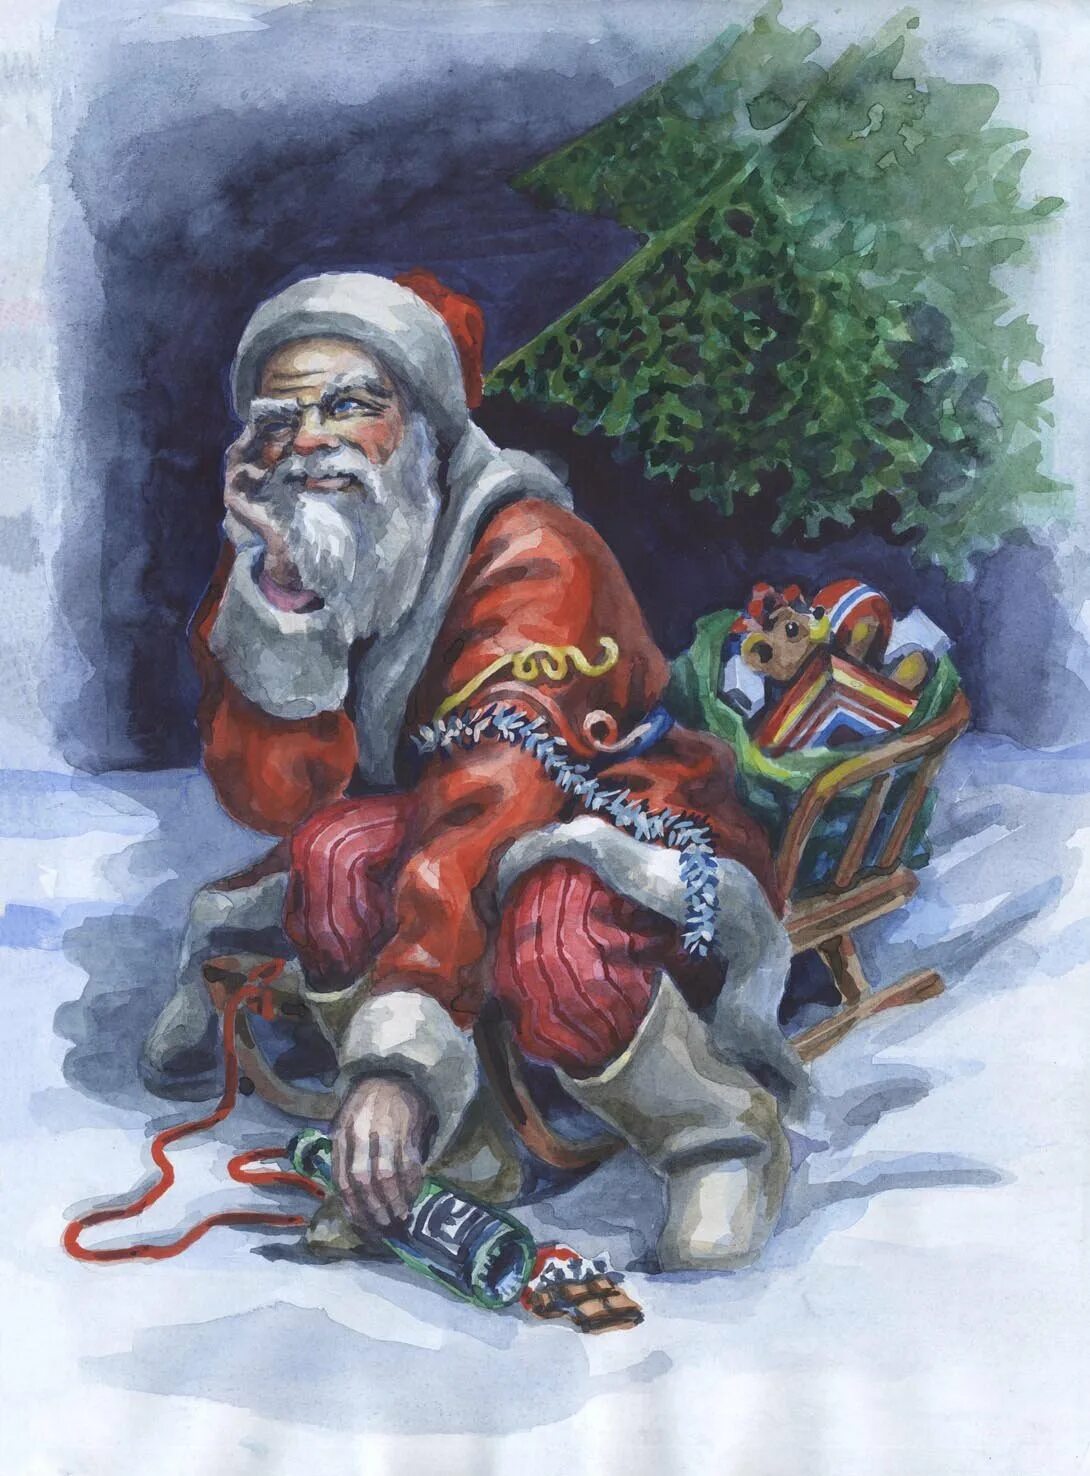 Блокадный дед мороз. Грустный дед Мороз. Уставший дед Мороз. Дед Мороз иллюстрация.